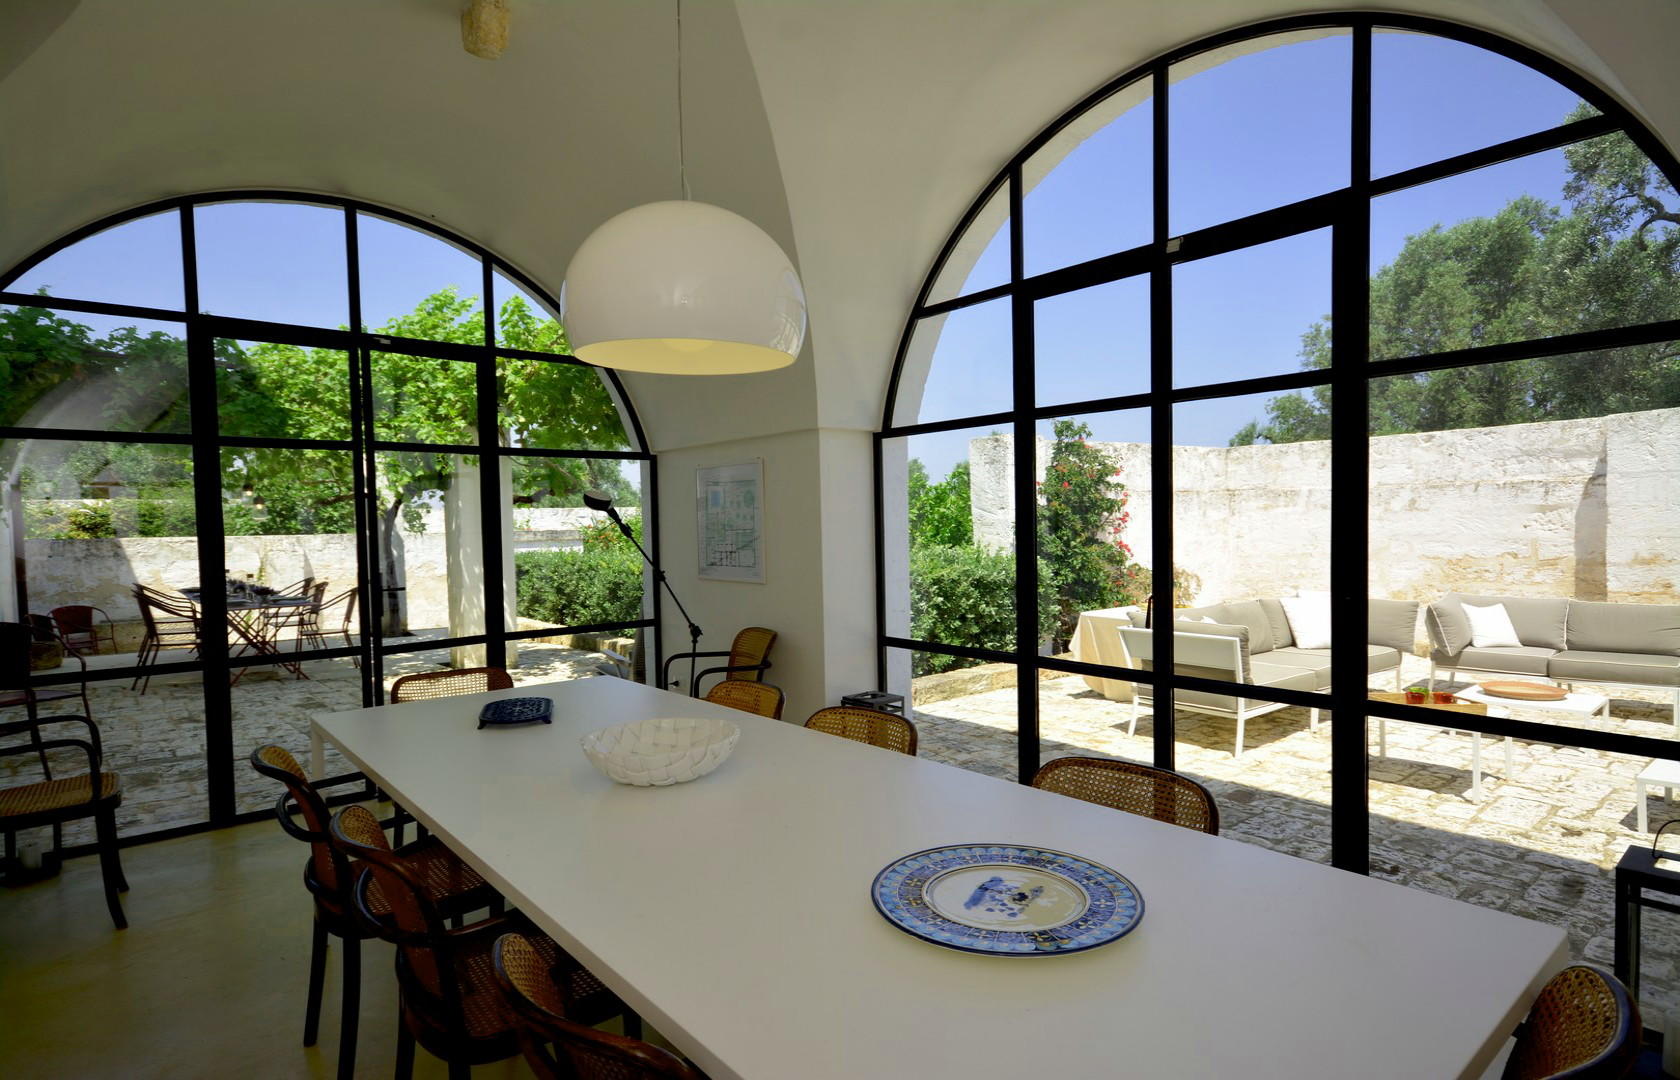 Ground floor, dining room with design kitchen corner